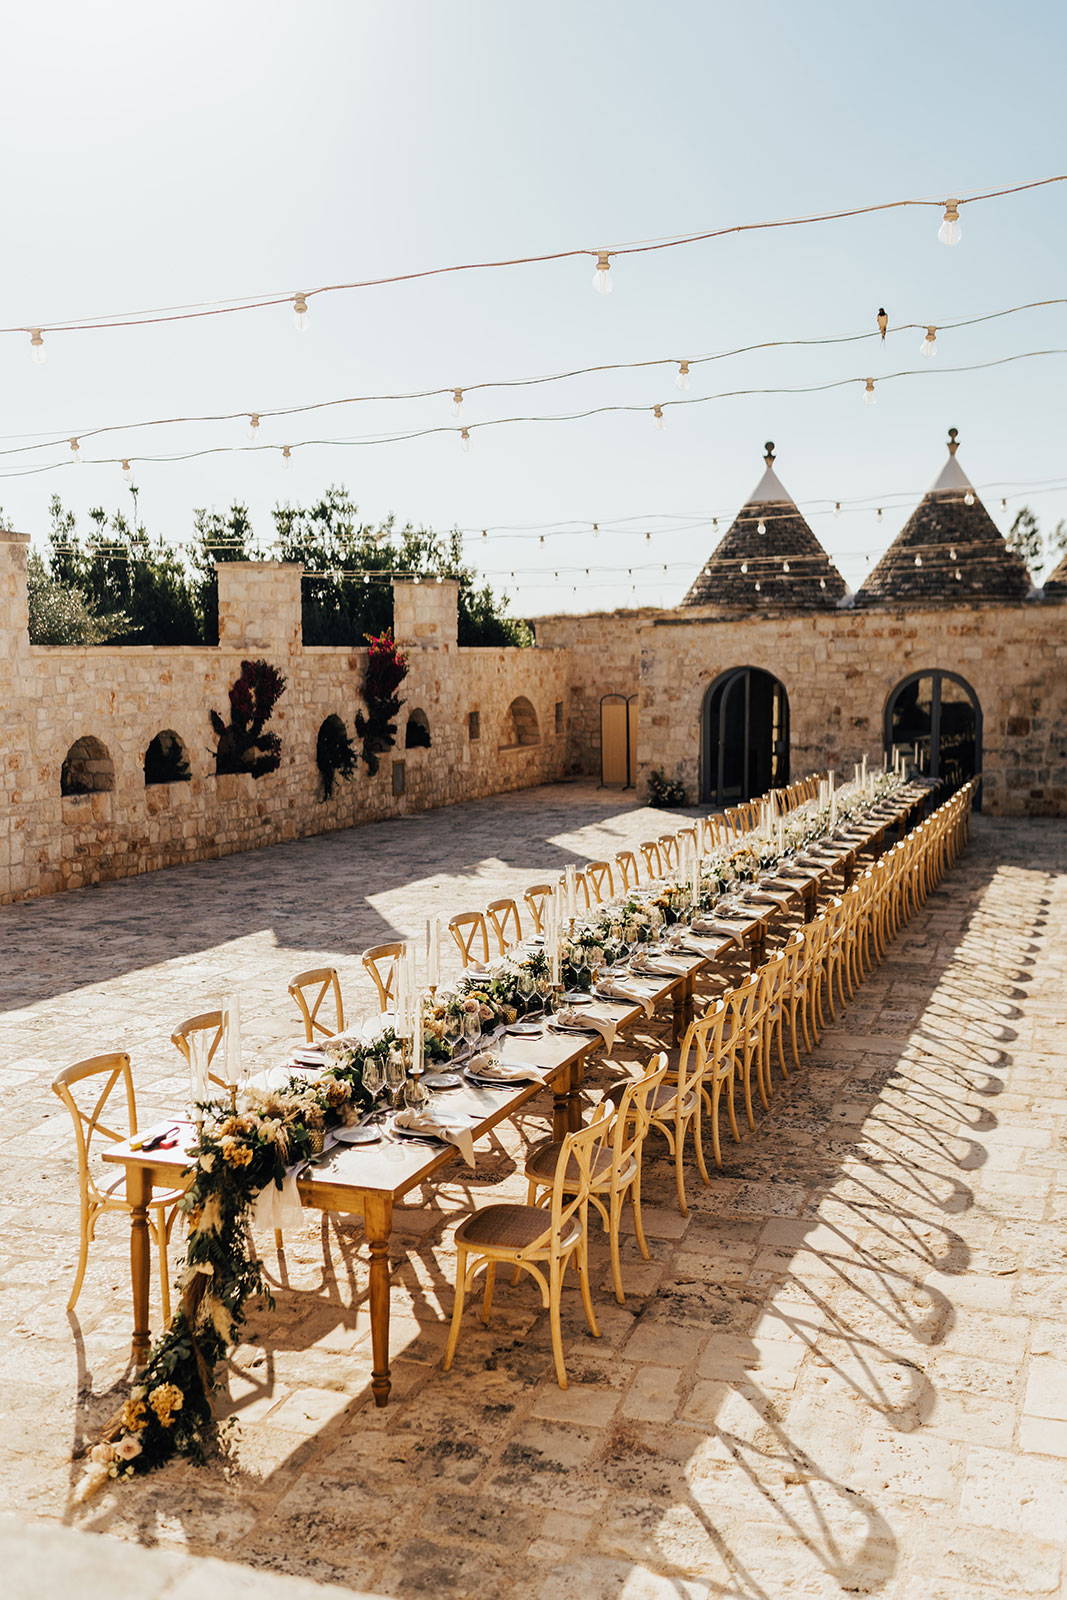 Wedding reception table layout